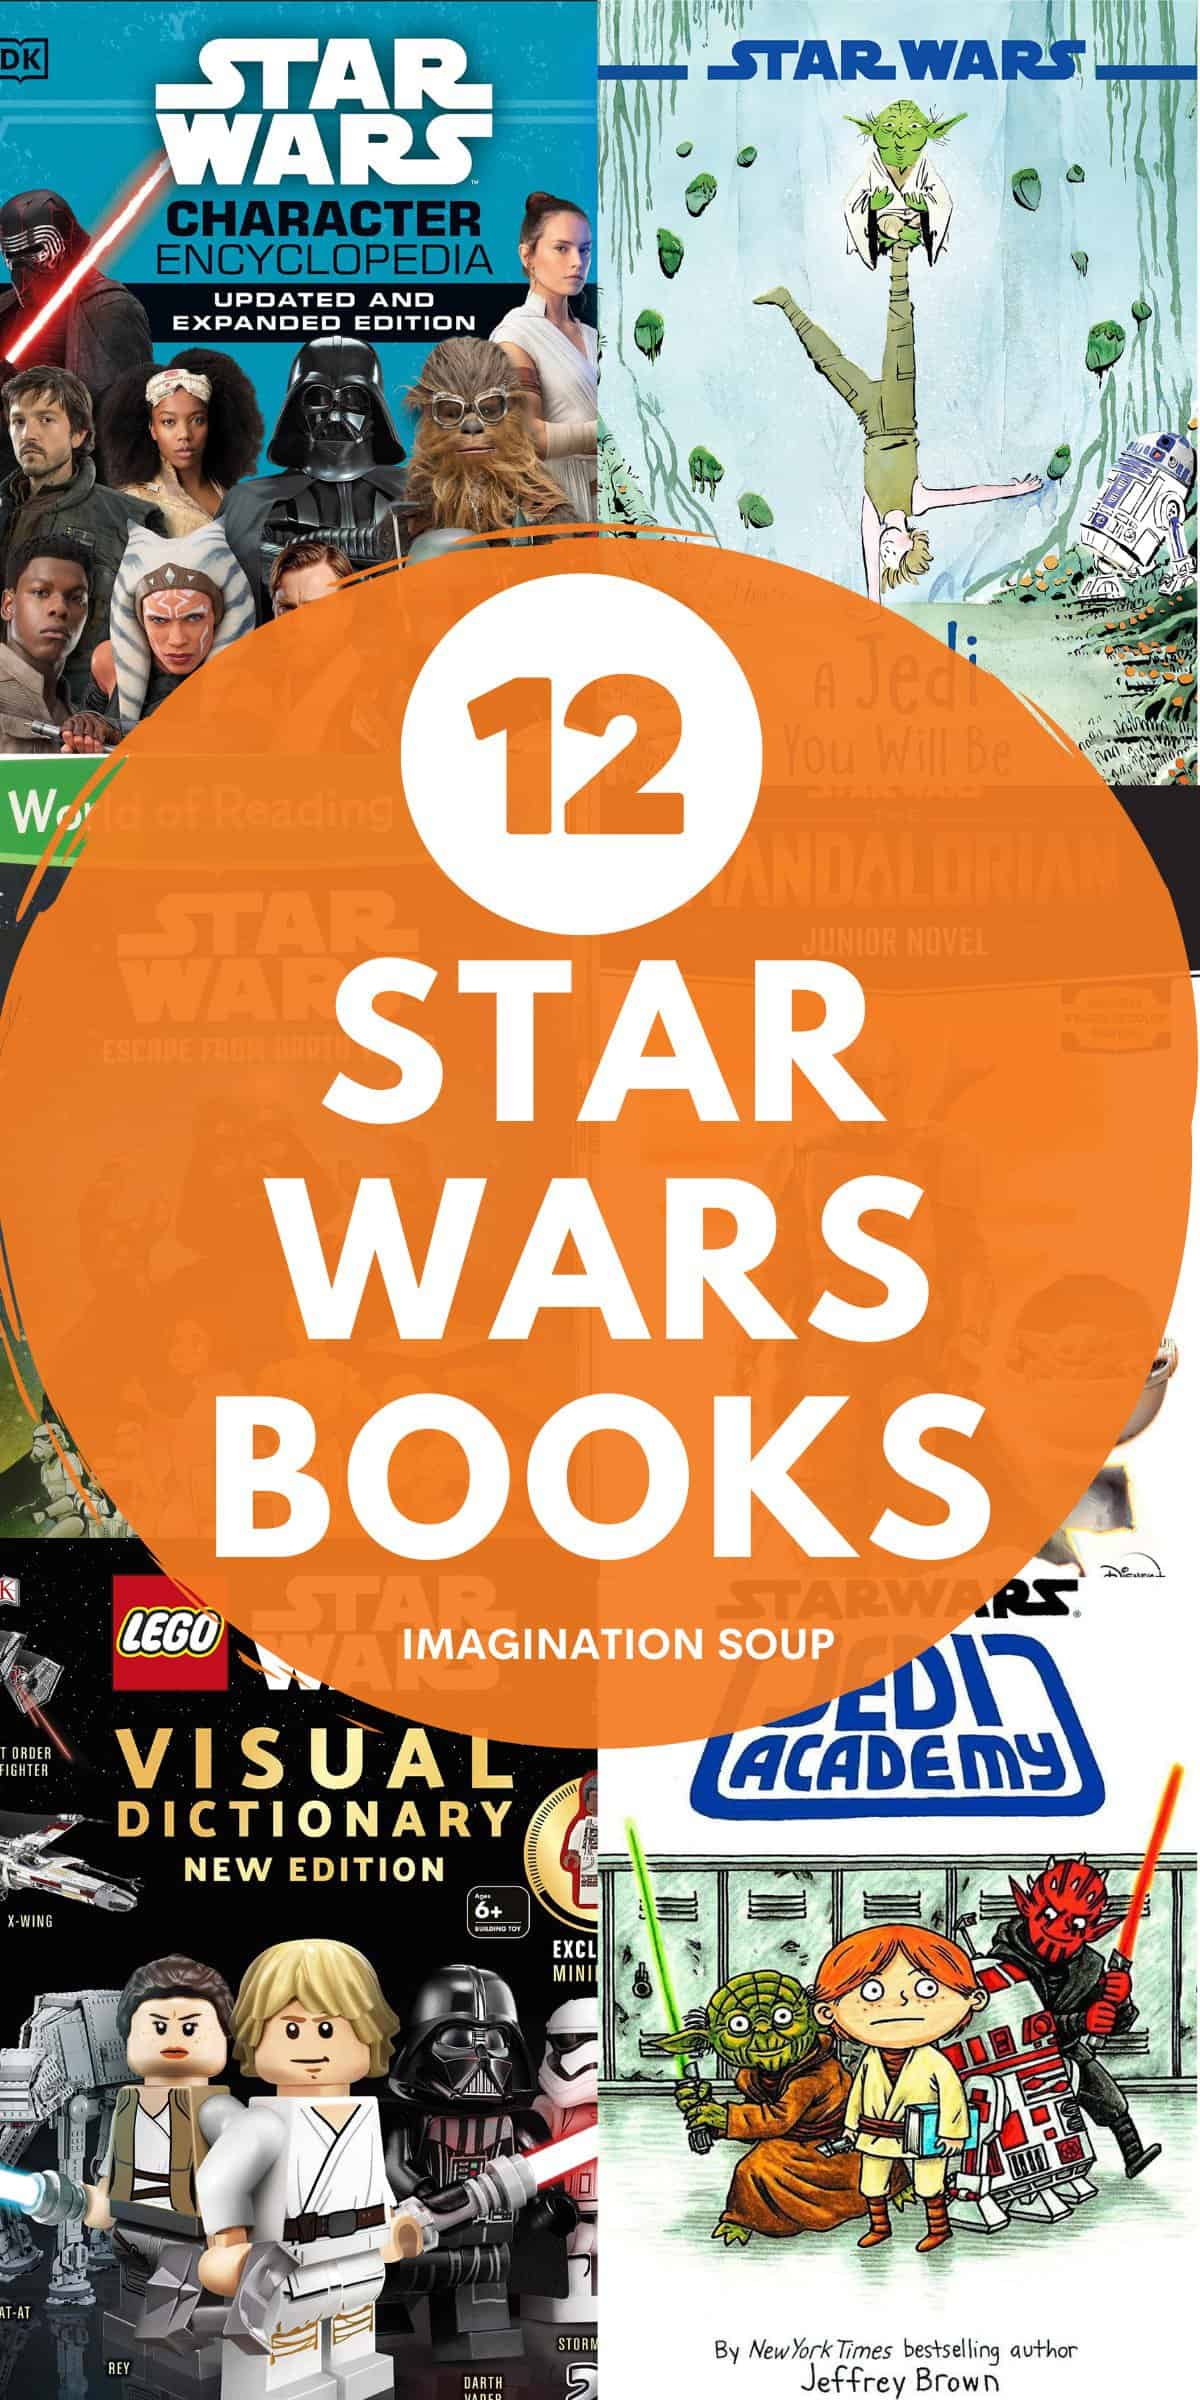 Star Wars books for kids